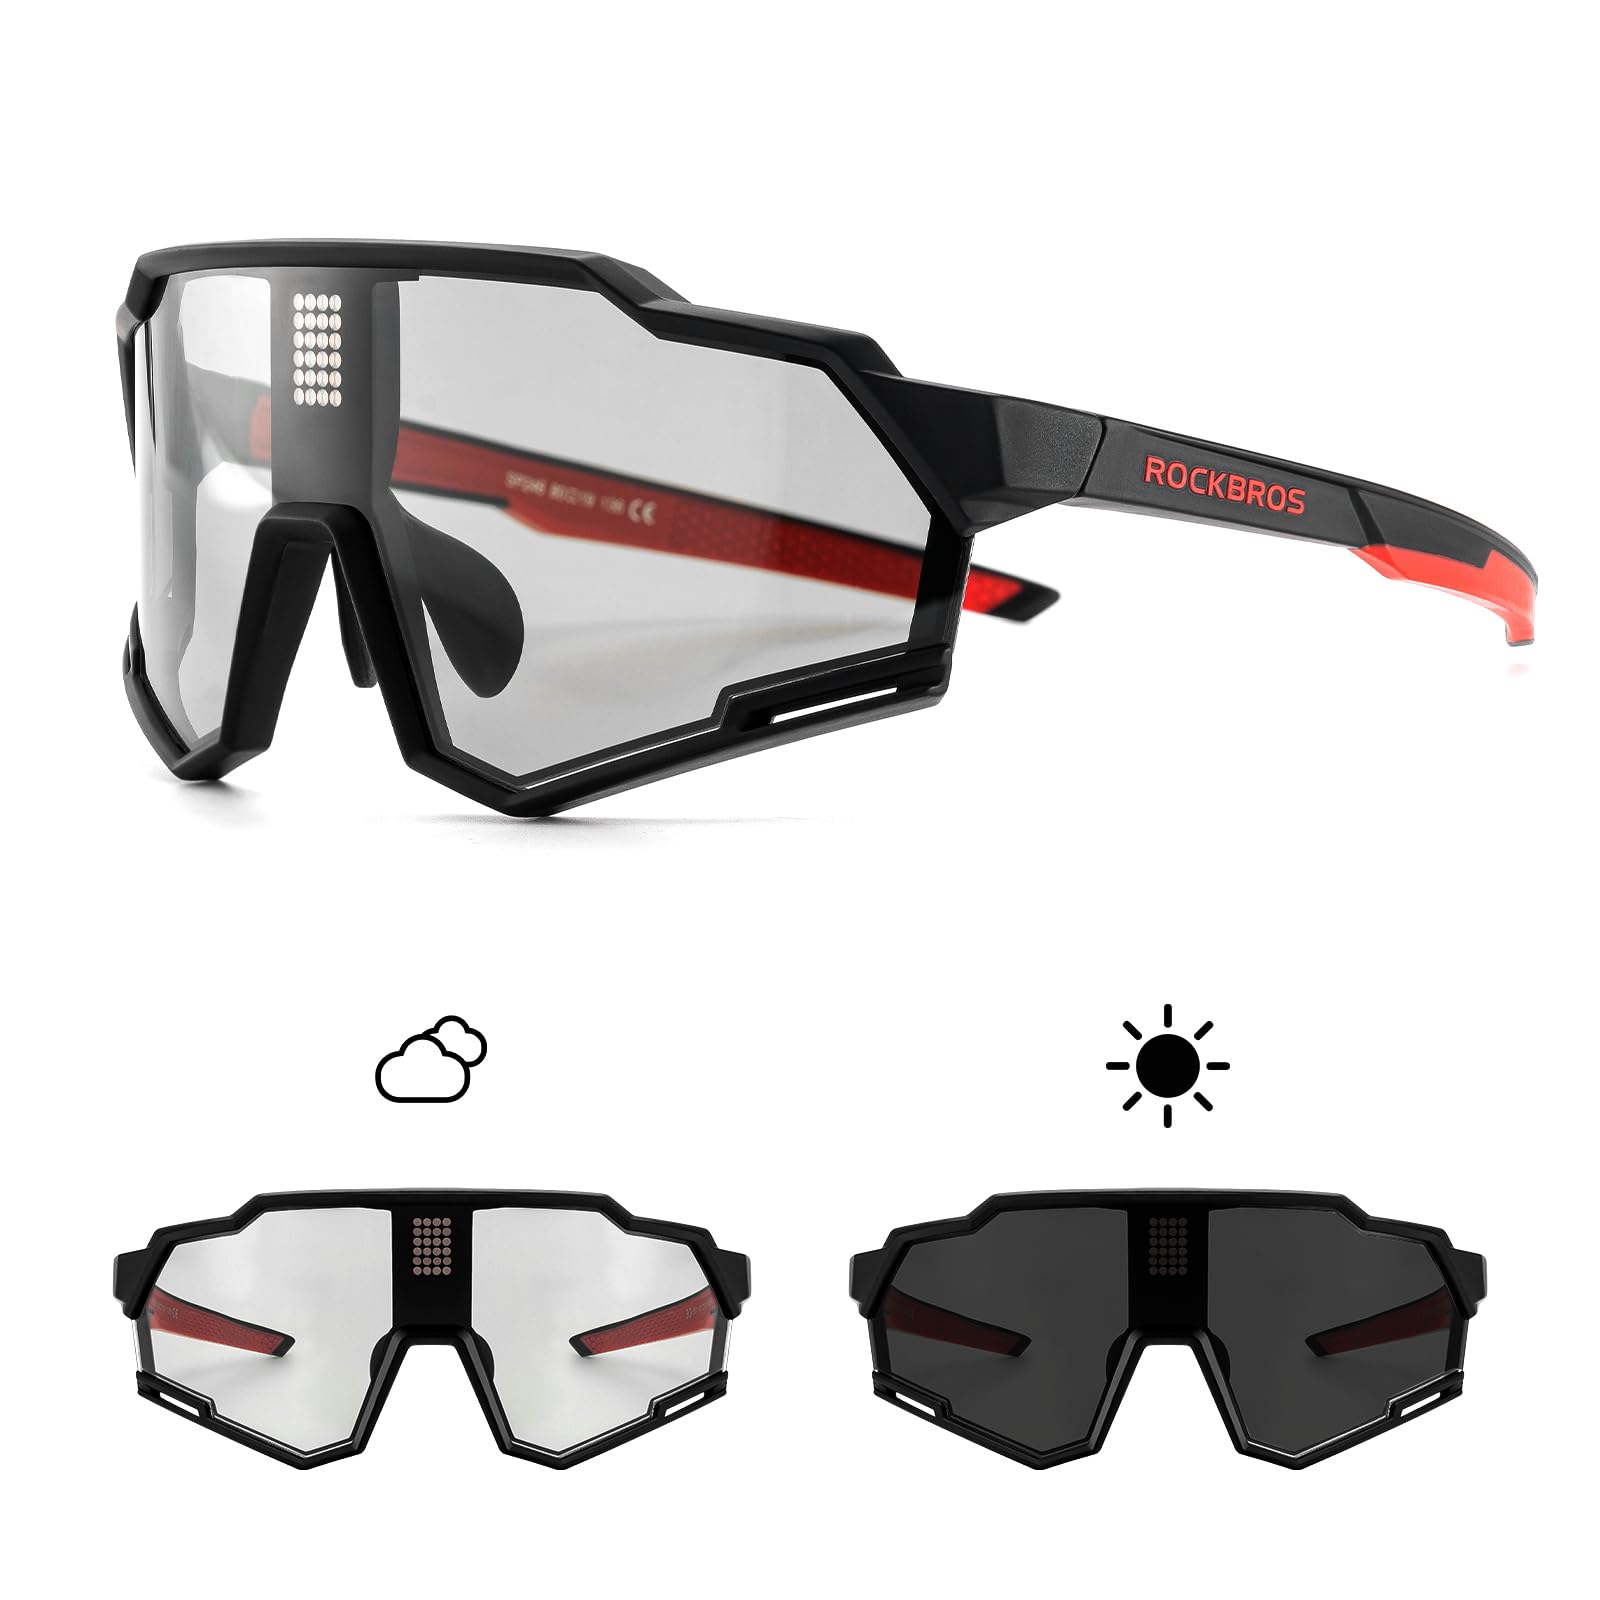 ROCKBROS Intelligent Cycling Glasses Sunglasses Photochromic + Polarized